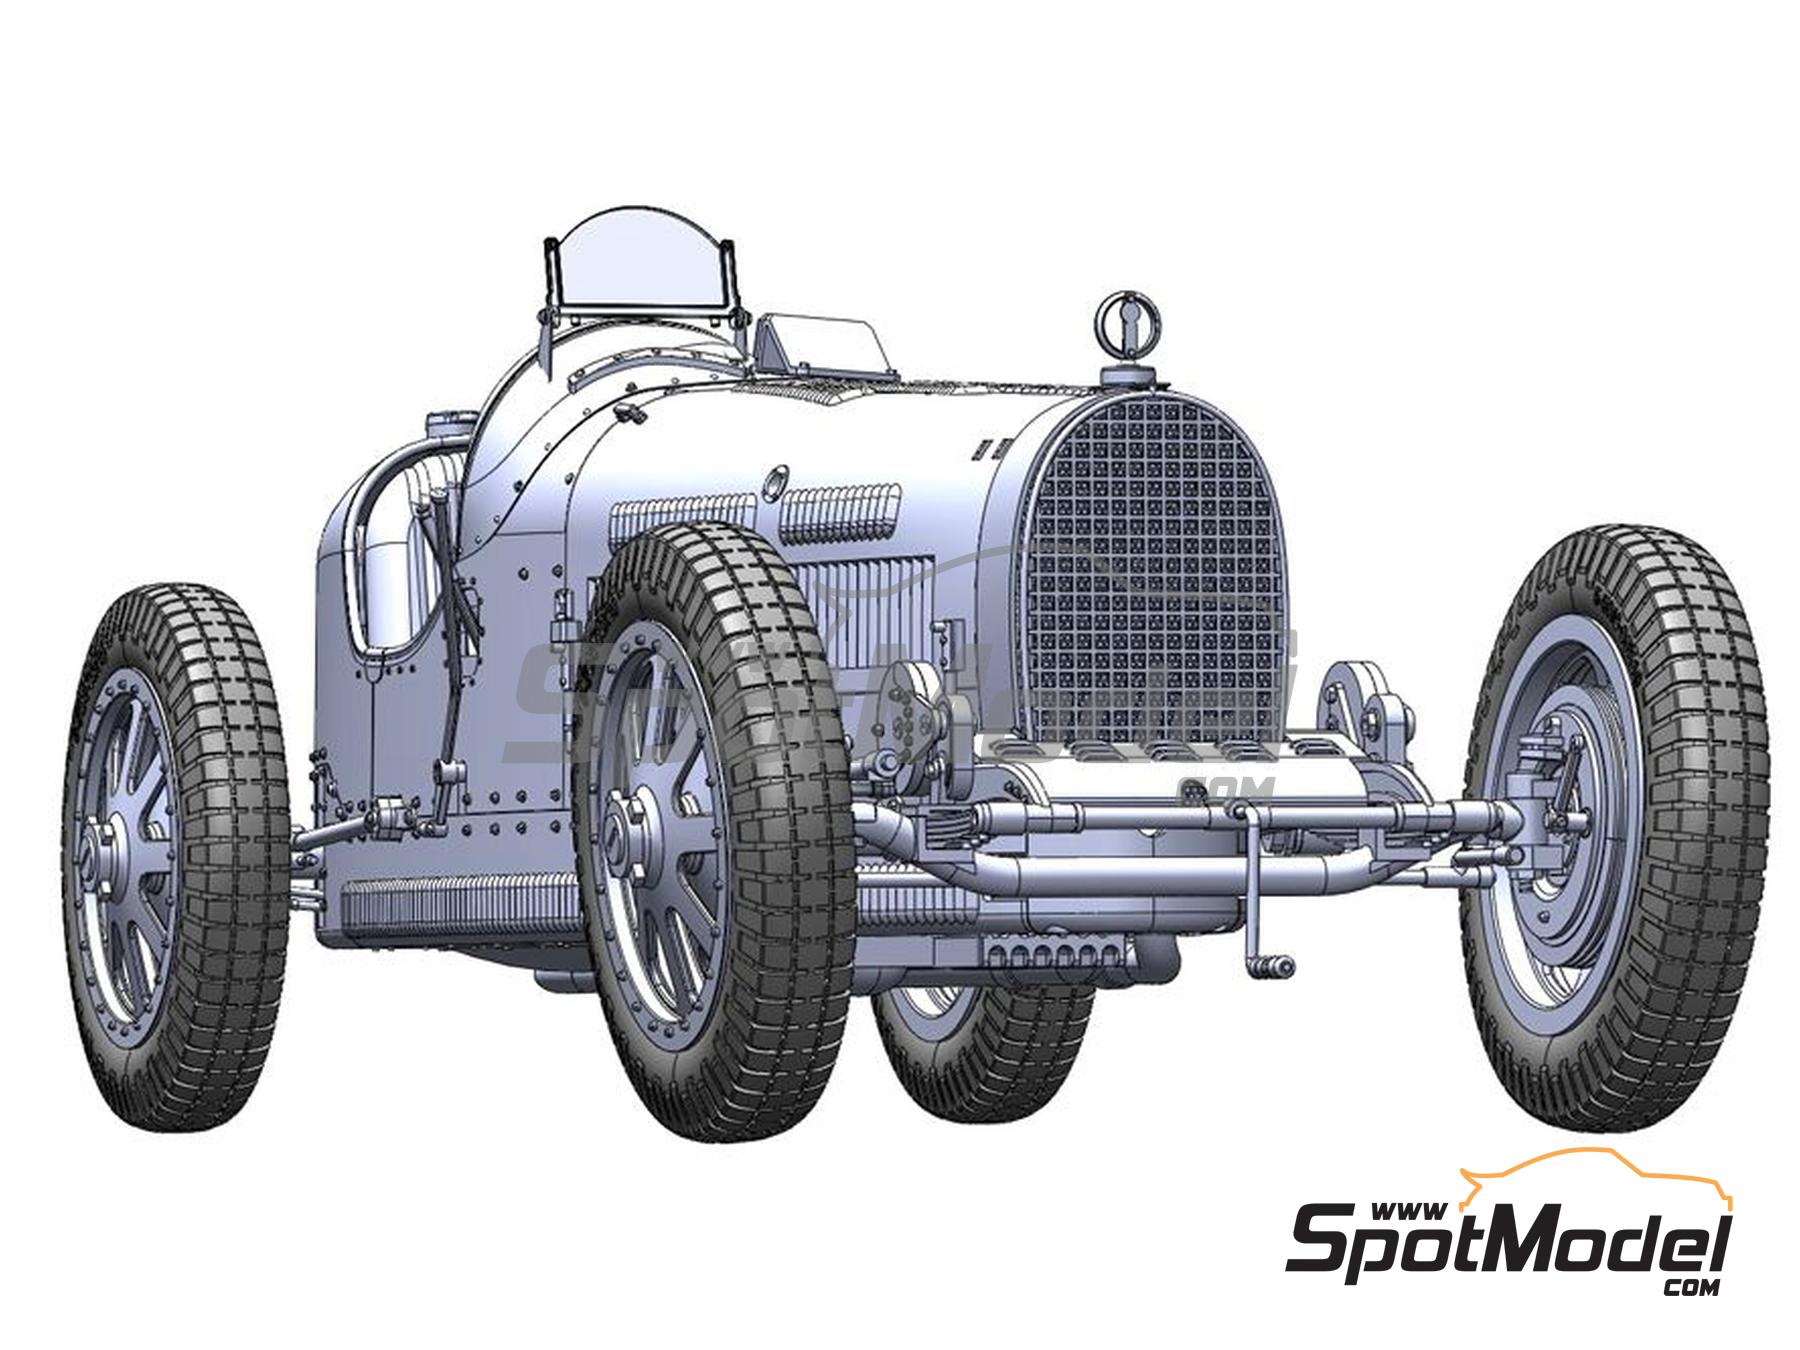 Italeri® Maquette de voiture Bugatti Type 35B 1:12 - 4710